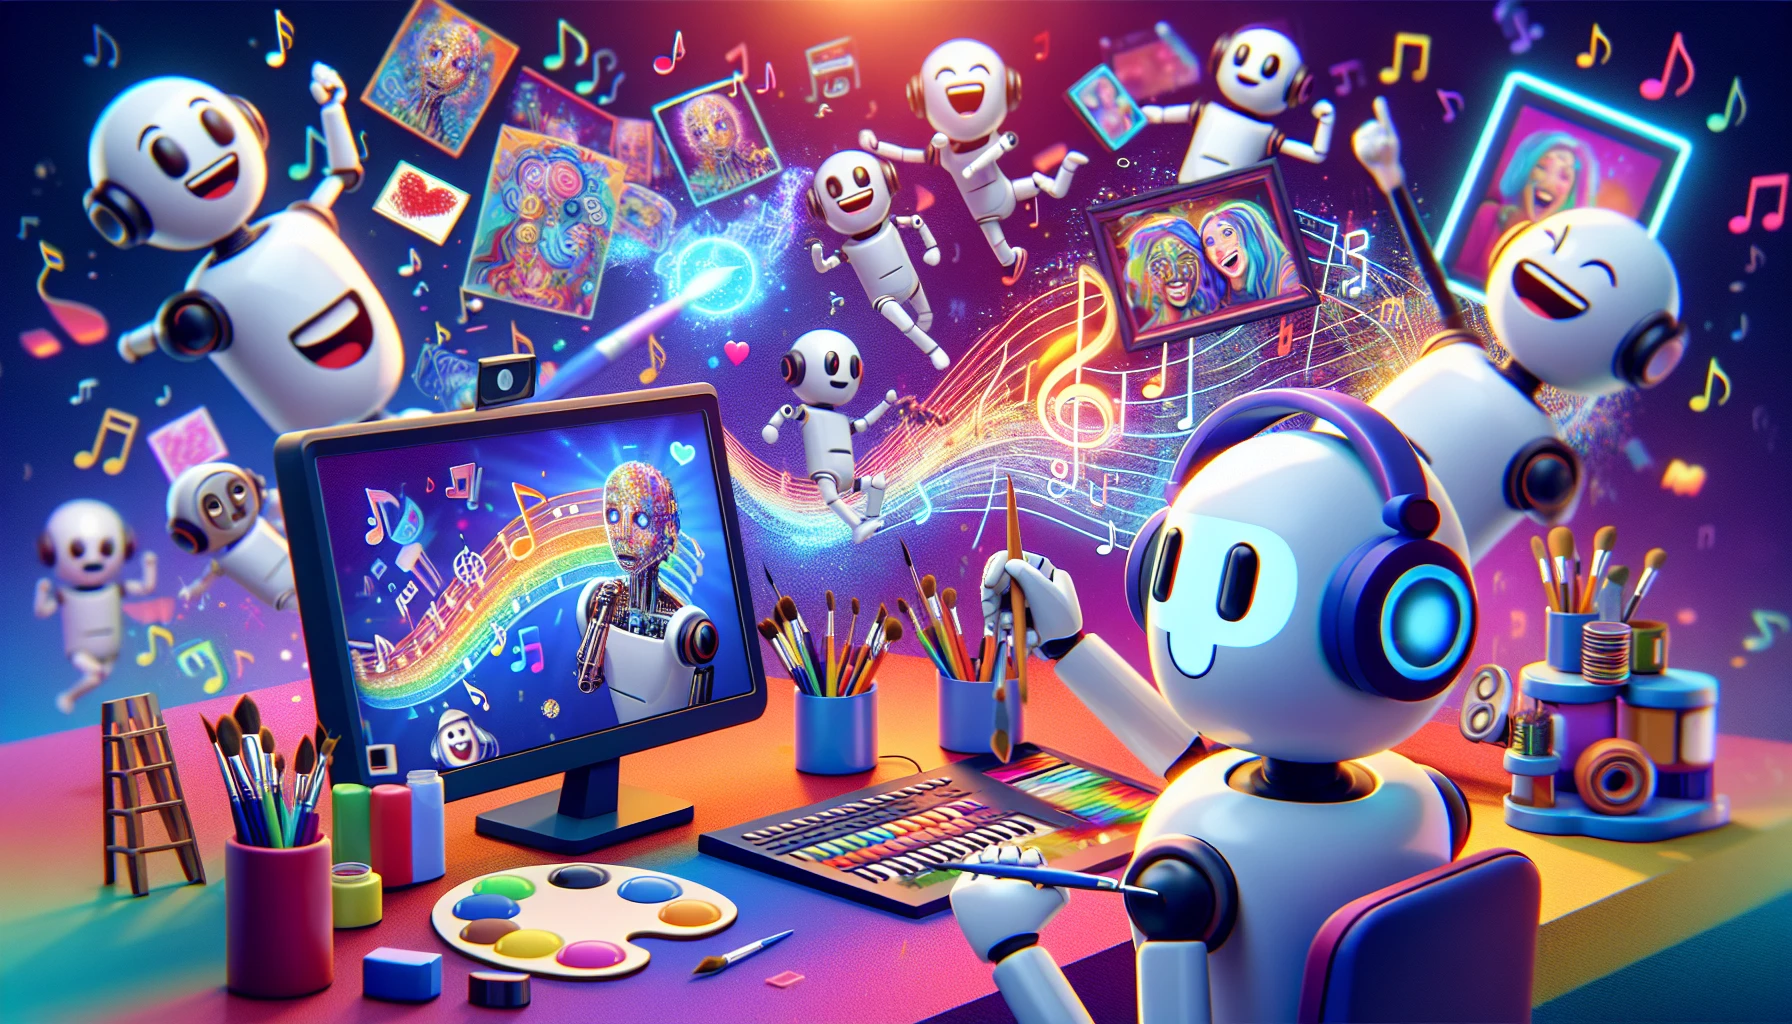 Illustration of AI fun and entertainment